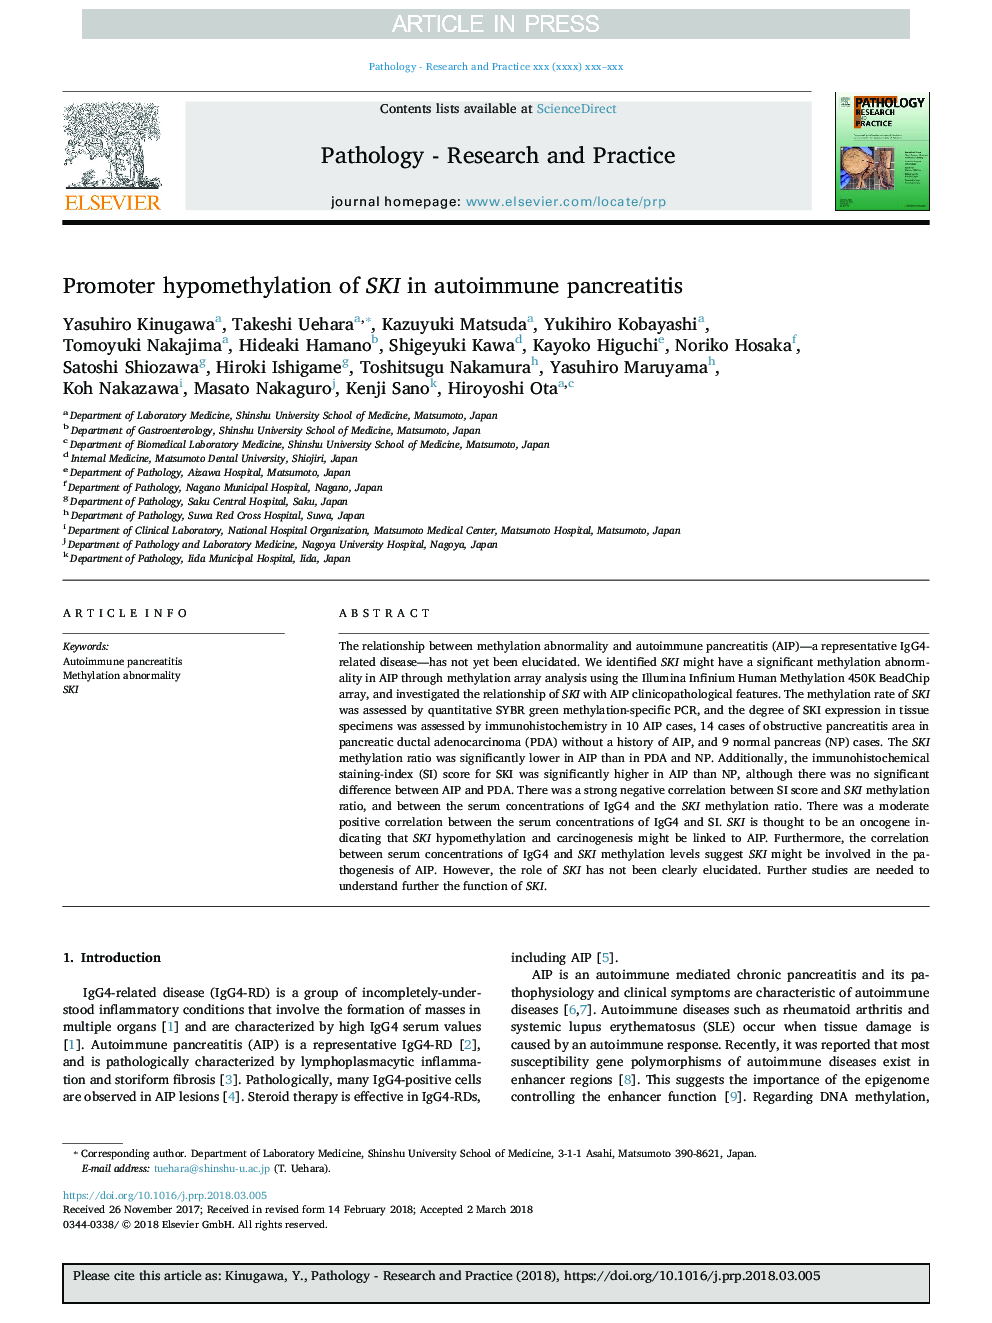 Promoter hypomethylation of SKI in autoimmune pancreatitis